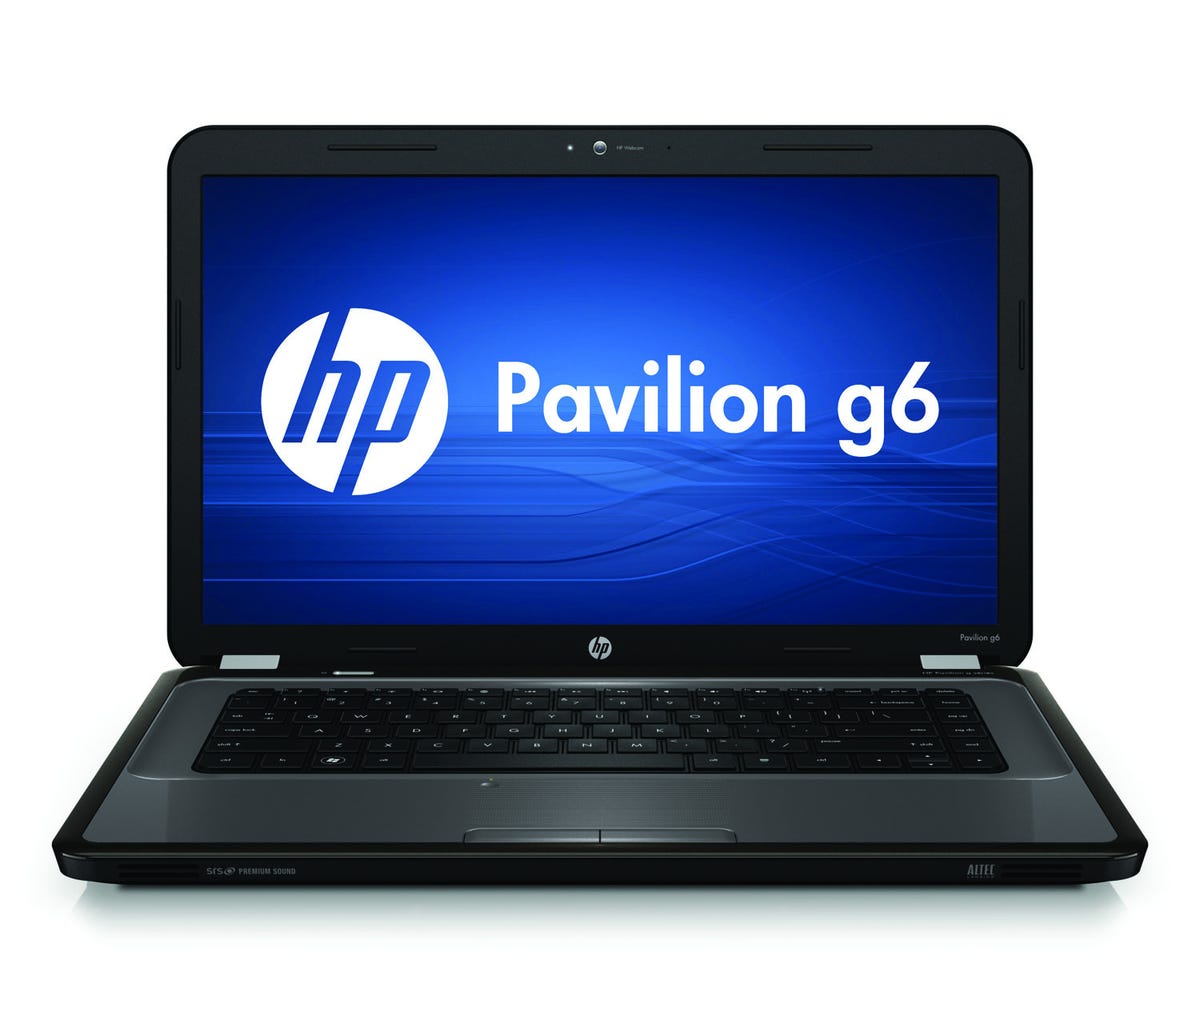 HP_Pavilion_g6_charcoal_Image_2.jpg